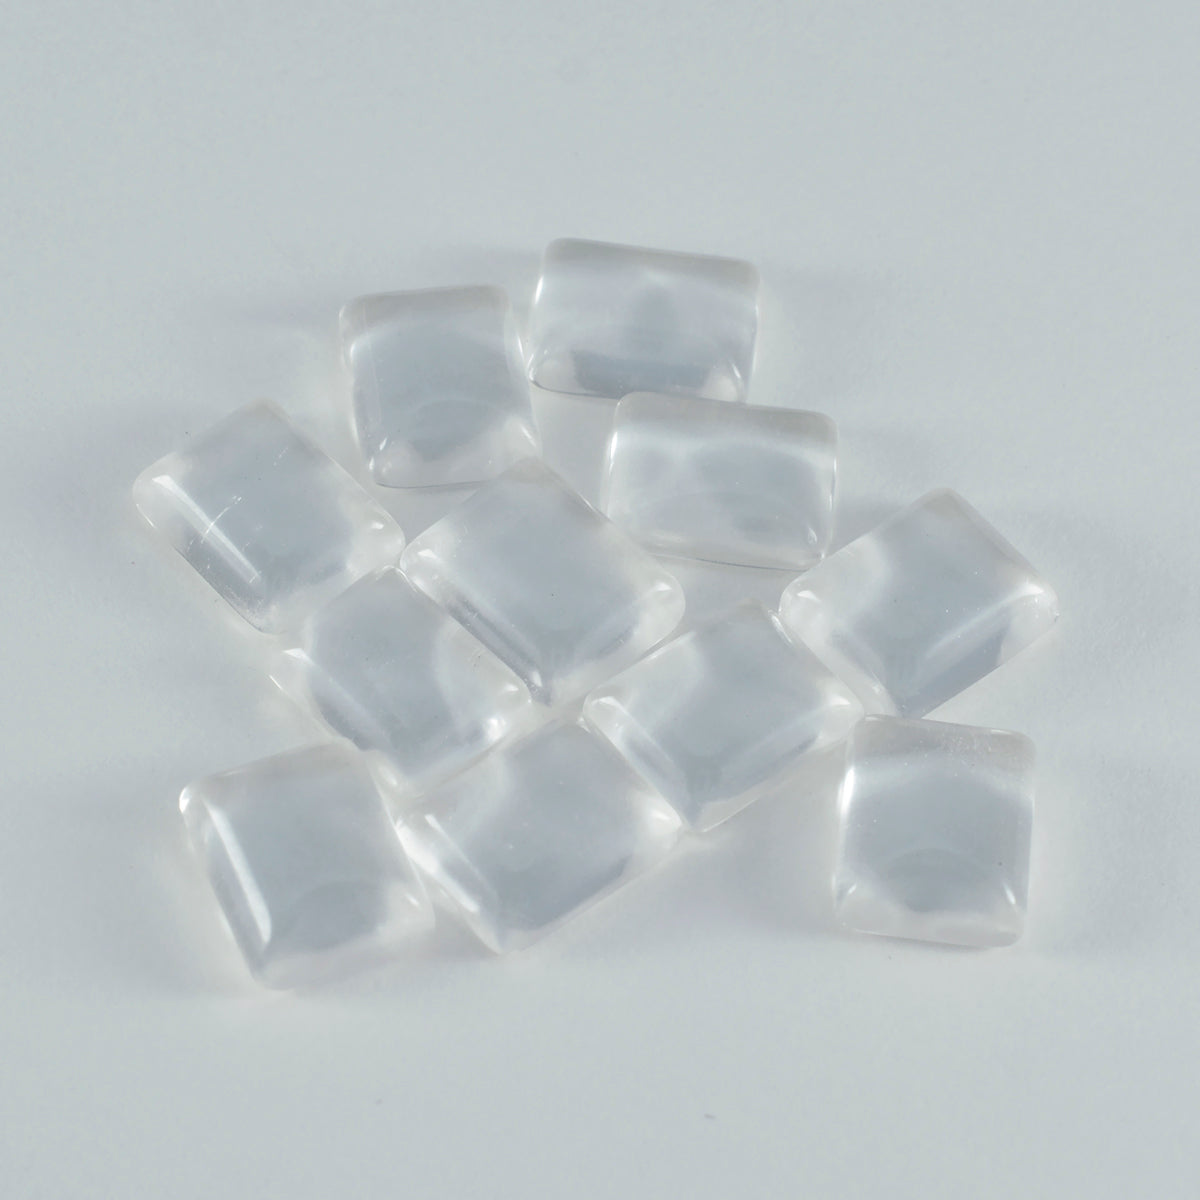 Riyogems 1PC White Crystal Quartz Cabochon 10x12 mm Octagon Shape fantastic Quality Loose Stone